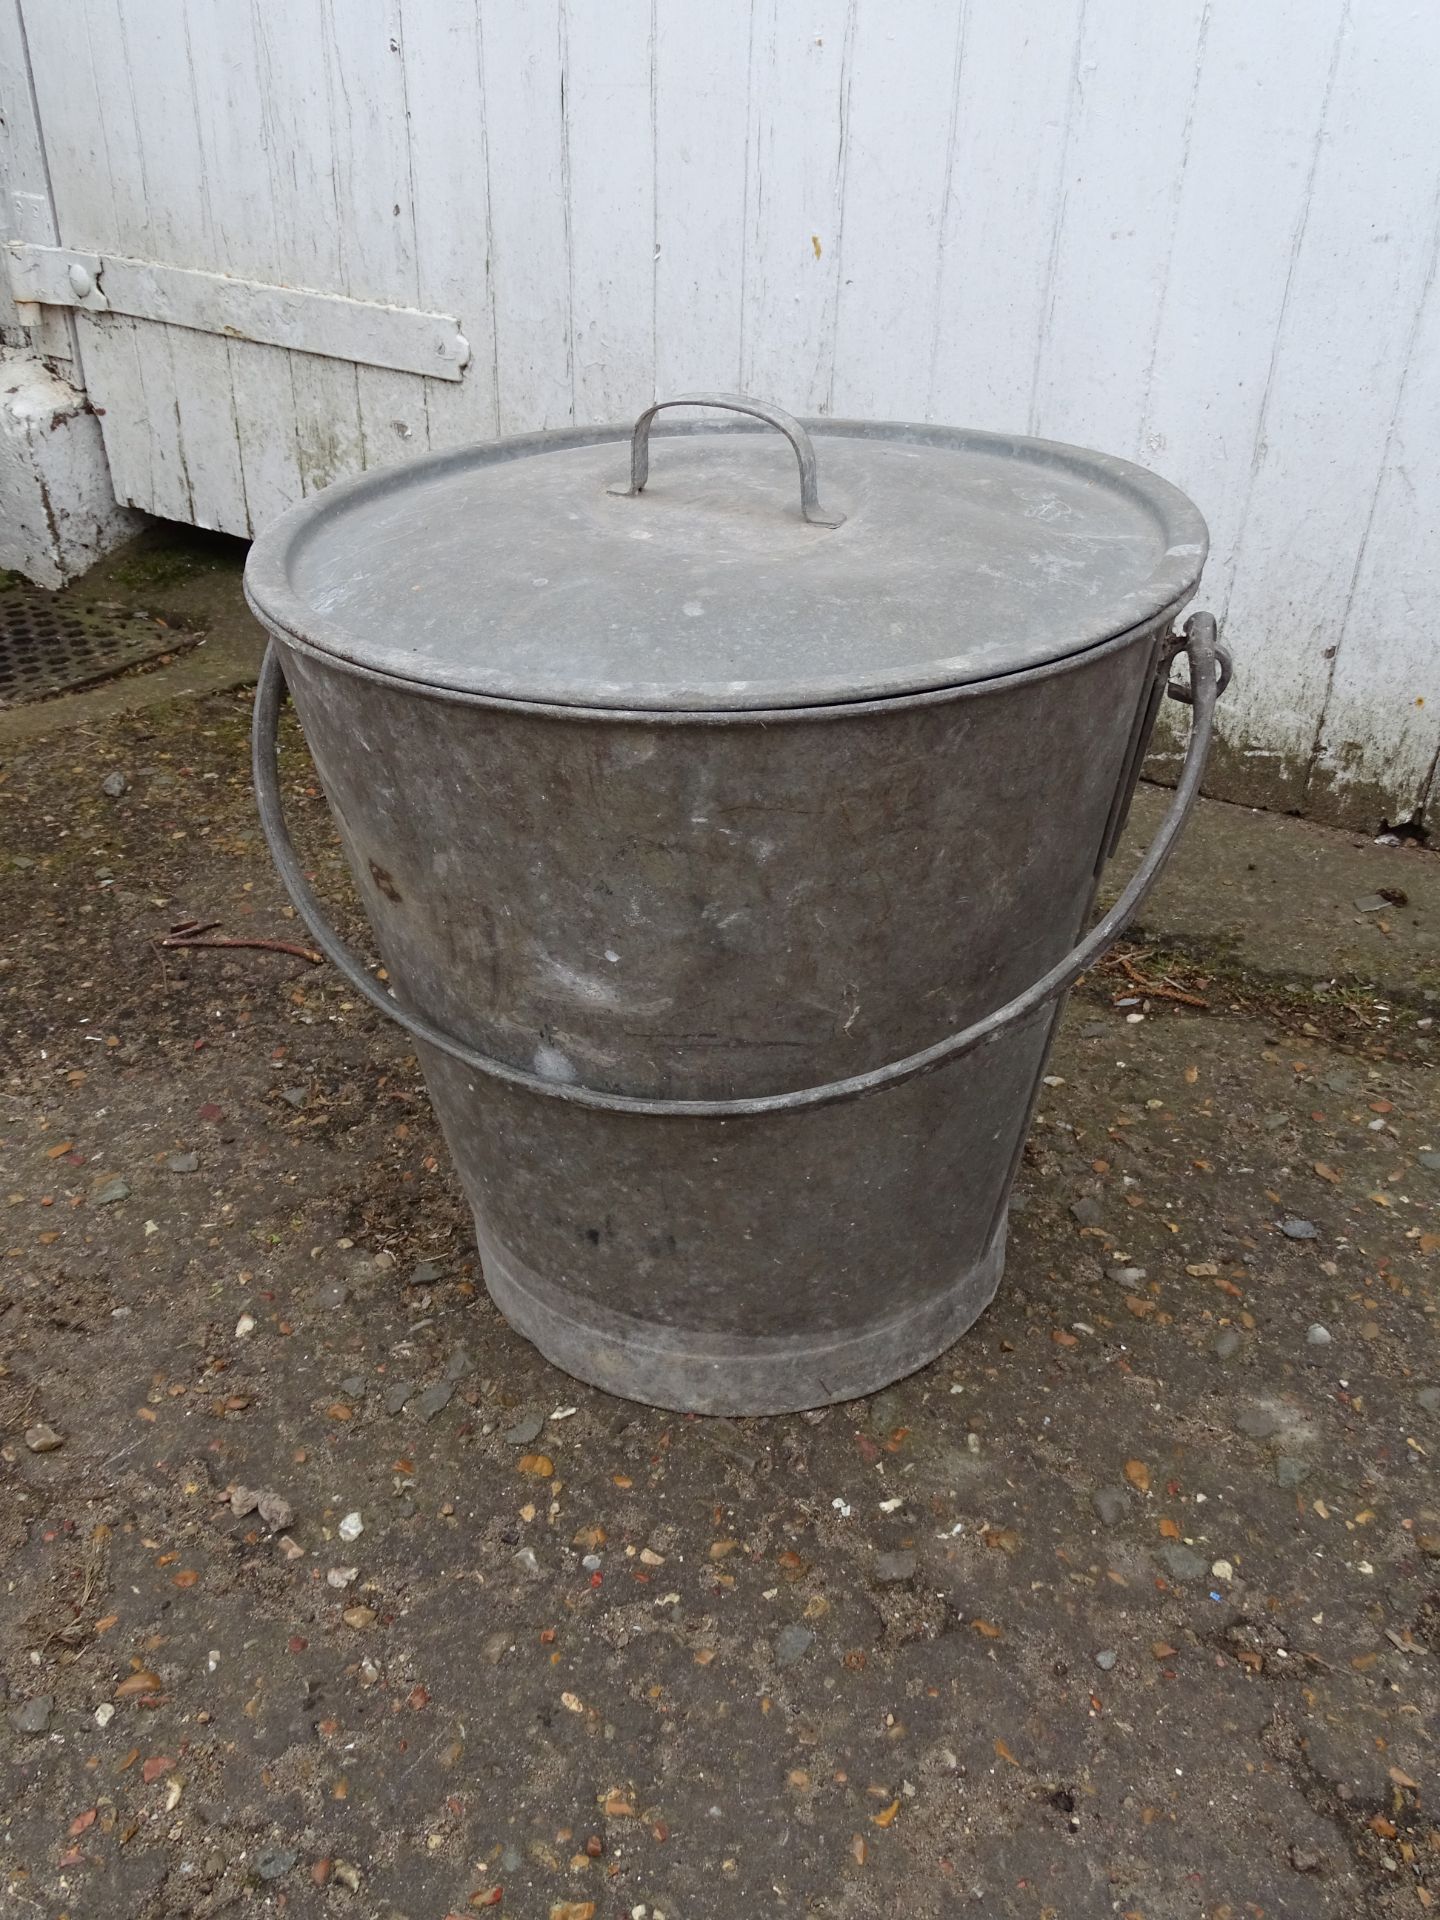 Galvanised bucket with lid